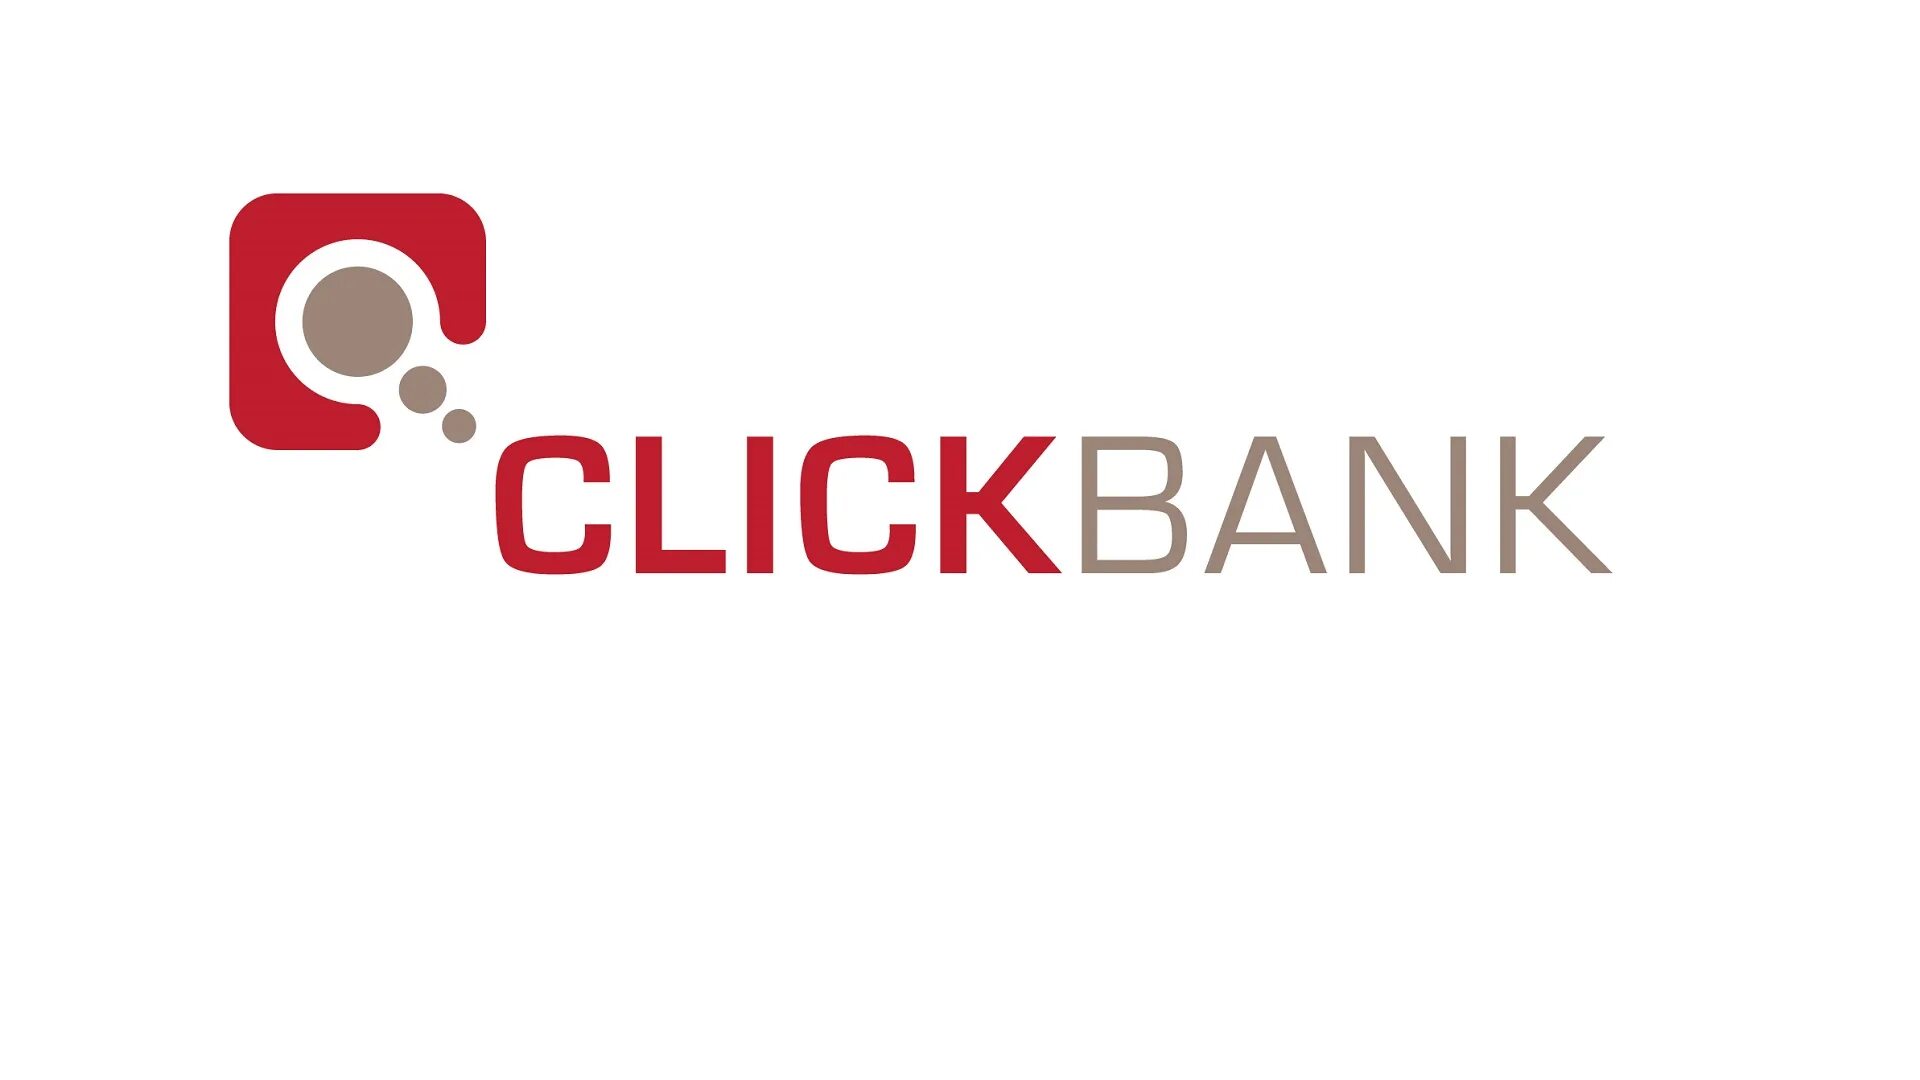 Click банк. Clickbank. Clickbank logo. Драйв клик банк логотип. Drive clickbank.